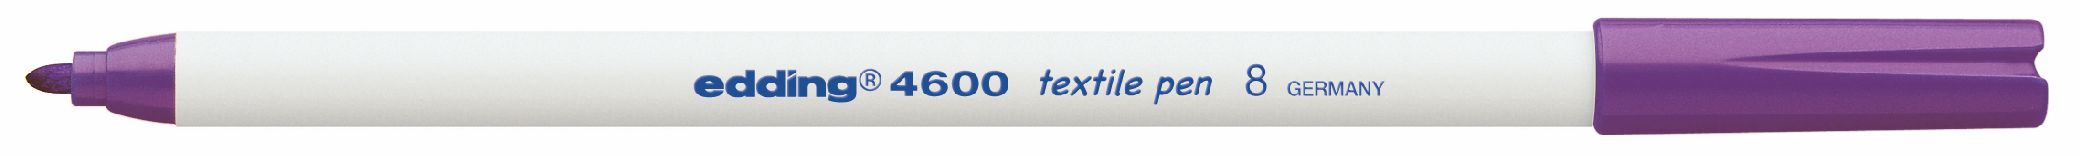 edding-4600-kumas-tekstil-kalemi-garantiofis